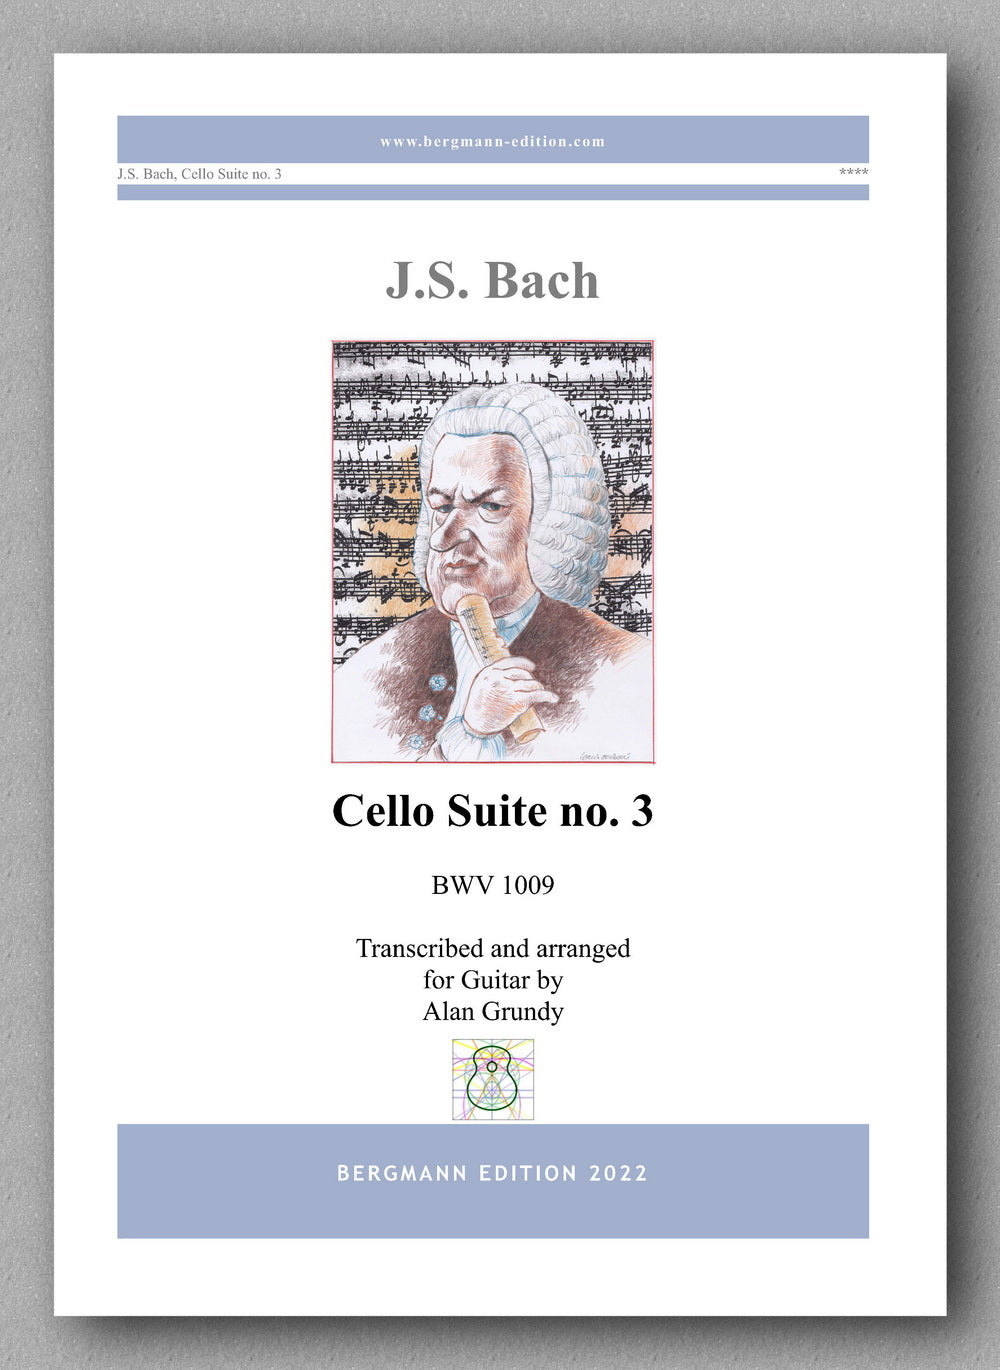 Bach-Grundy, Cello Suite no. 3 - Cover